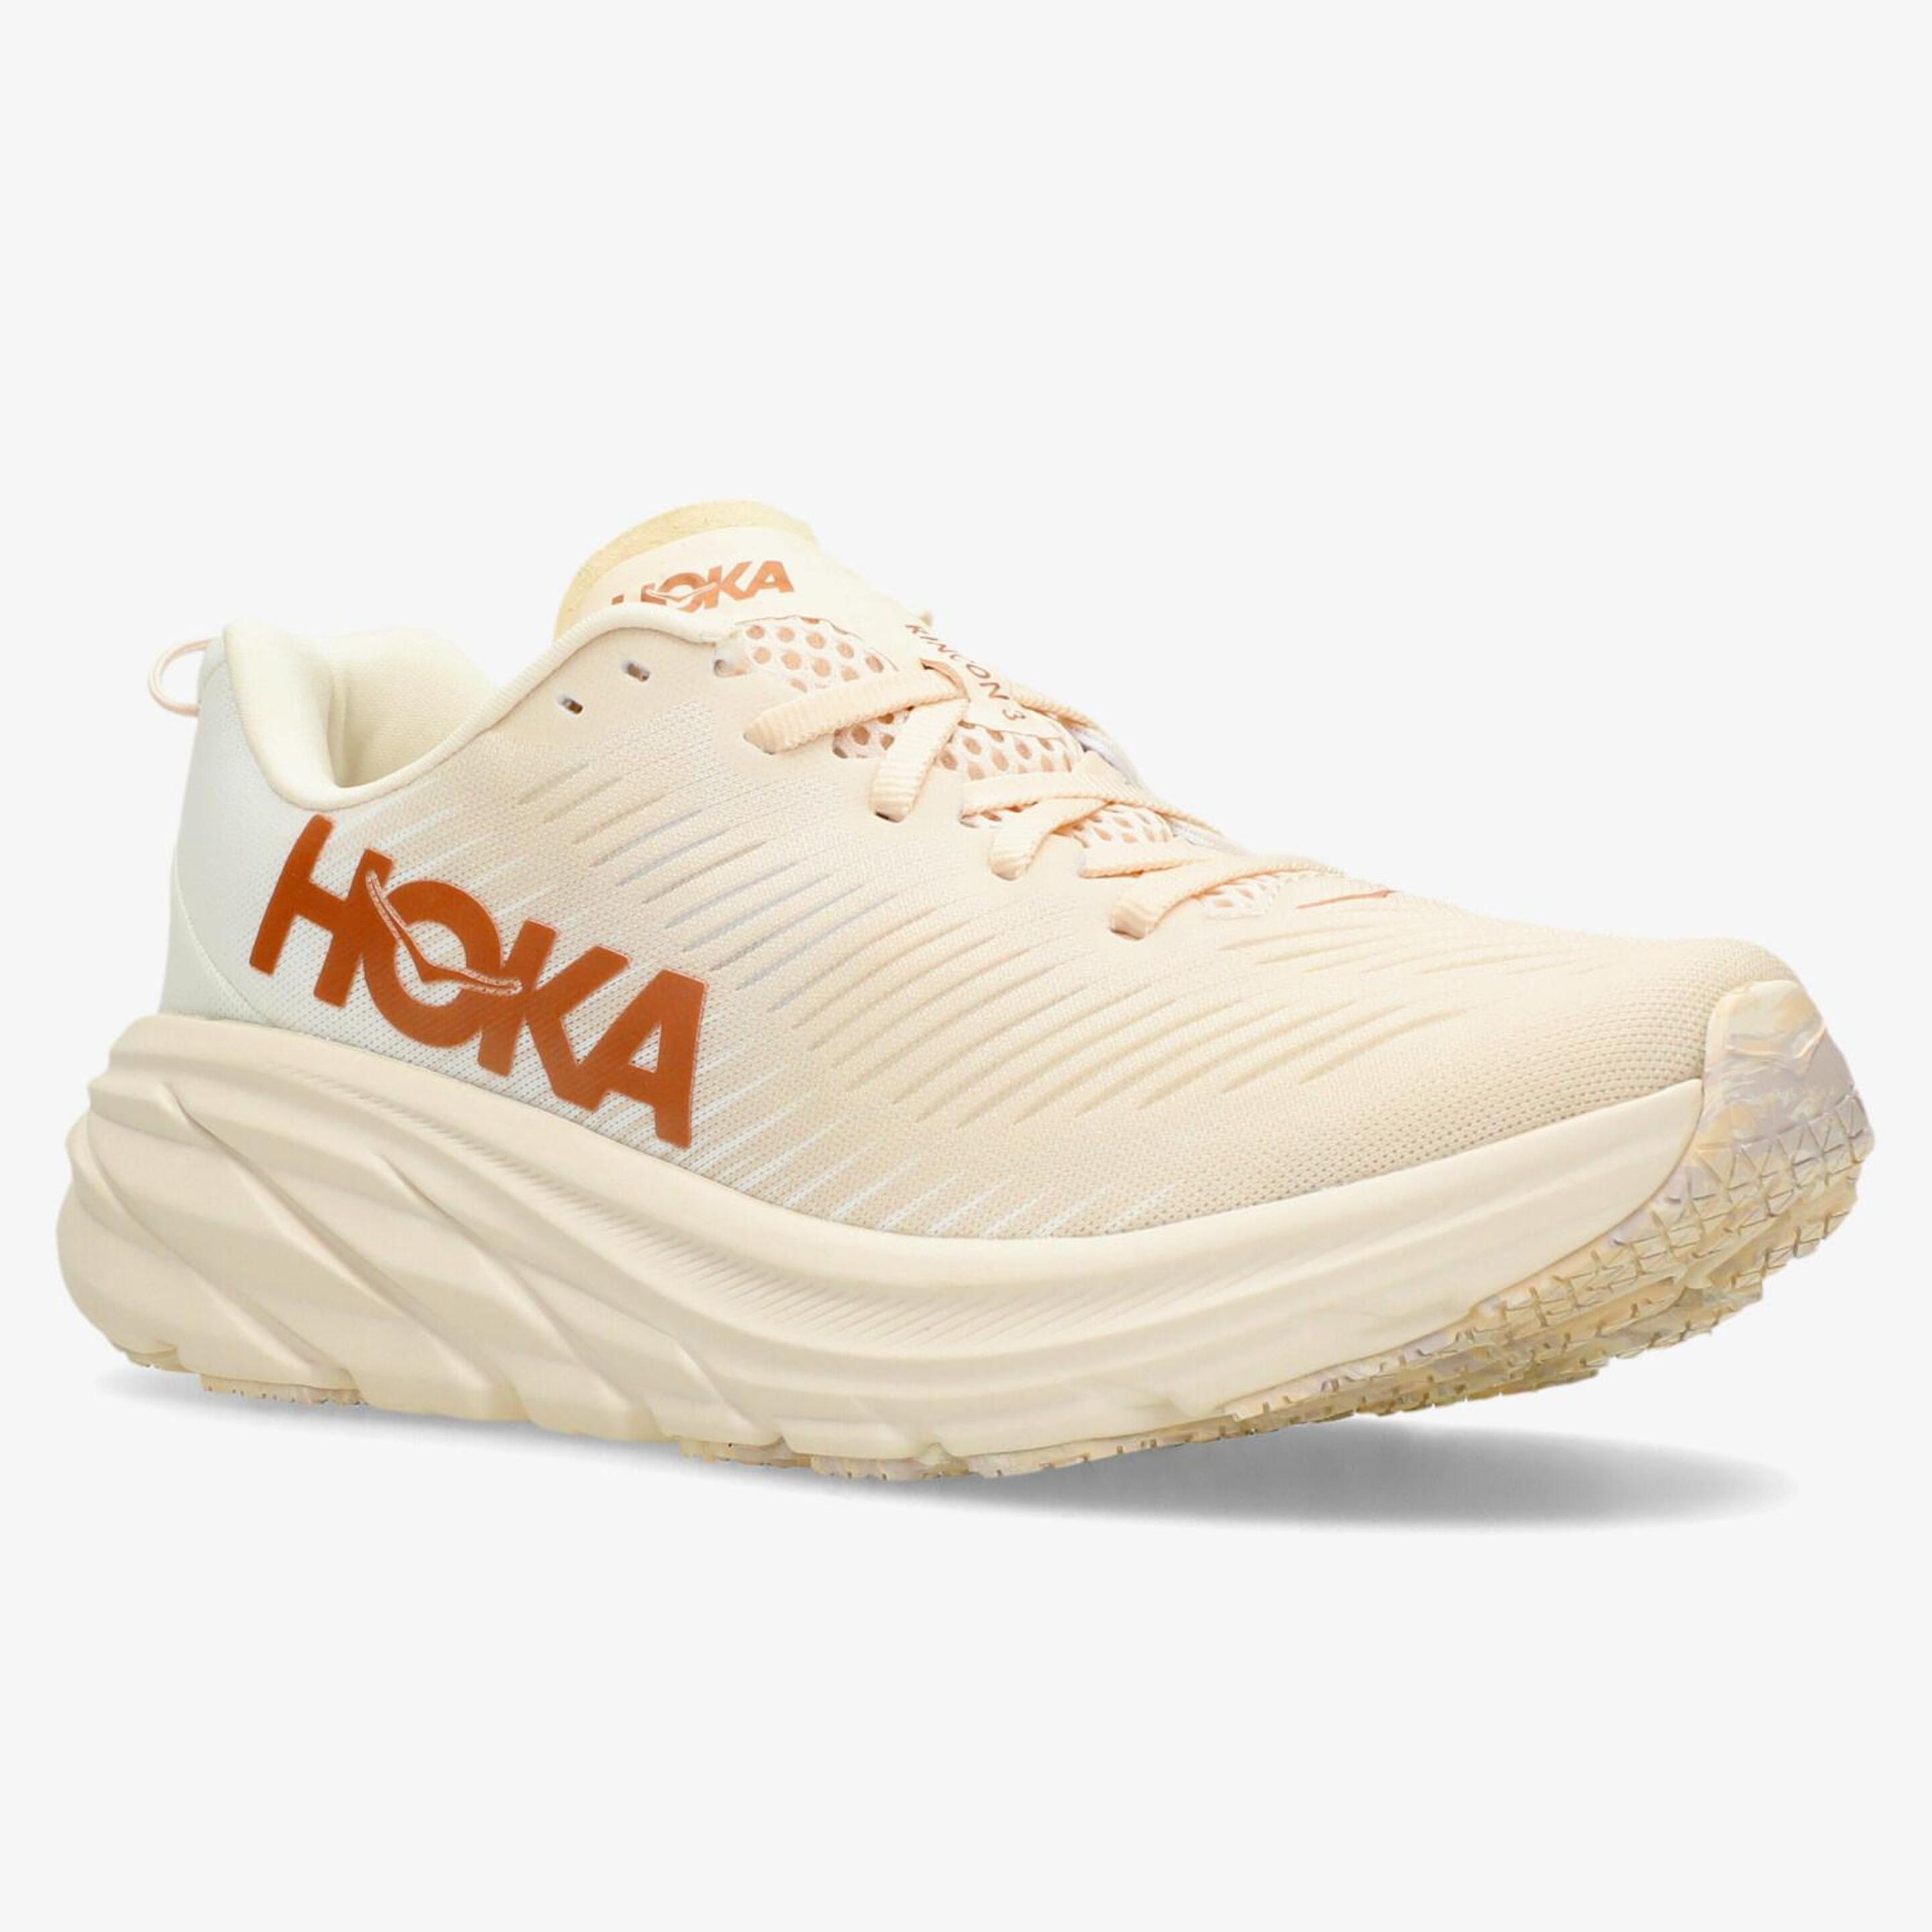 Hoka Rincon 3 - Beige - Zapatillas Running Mujer